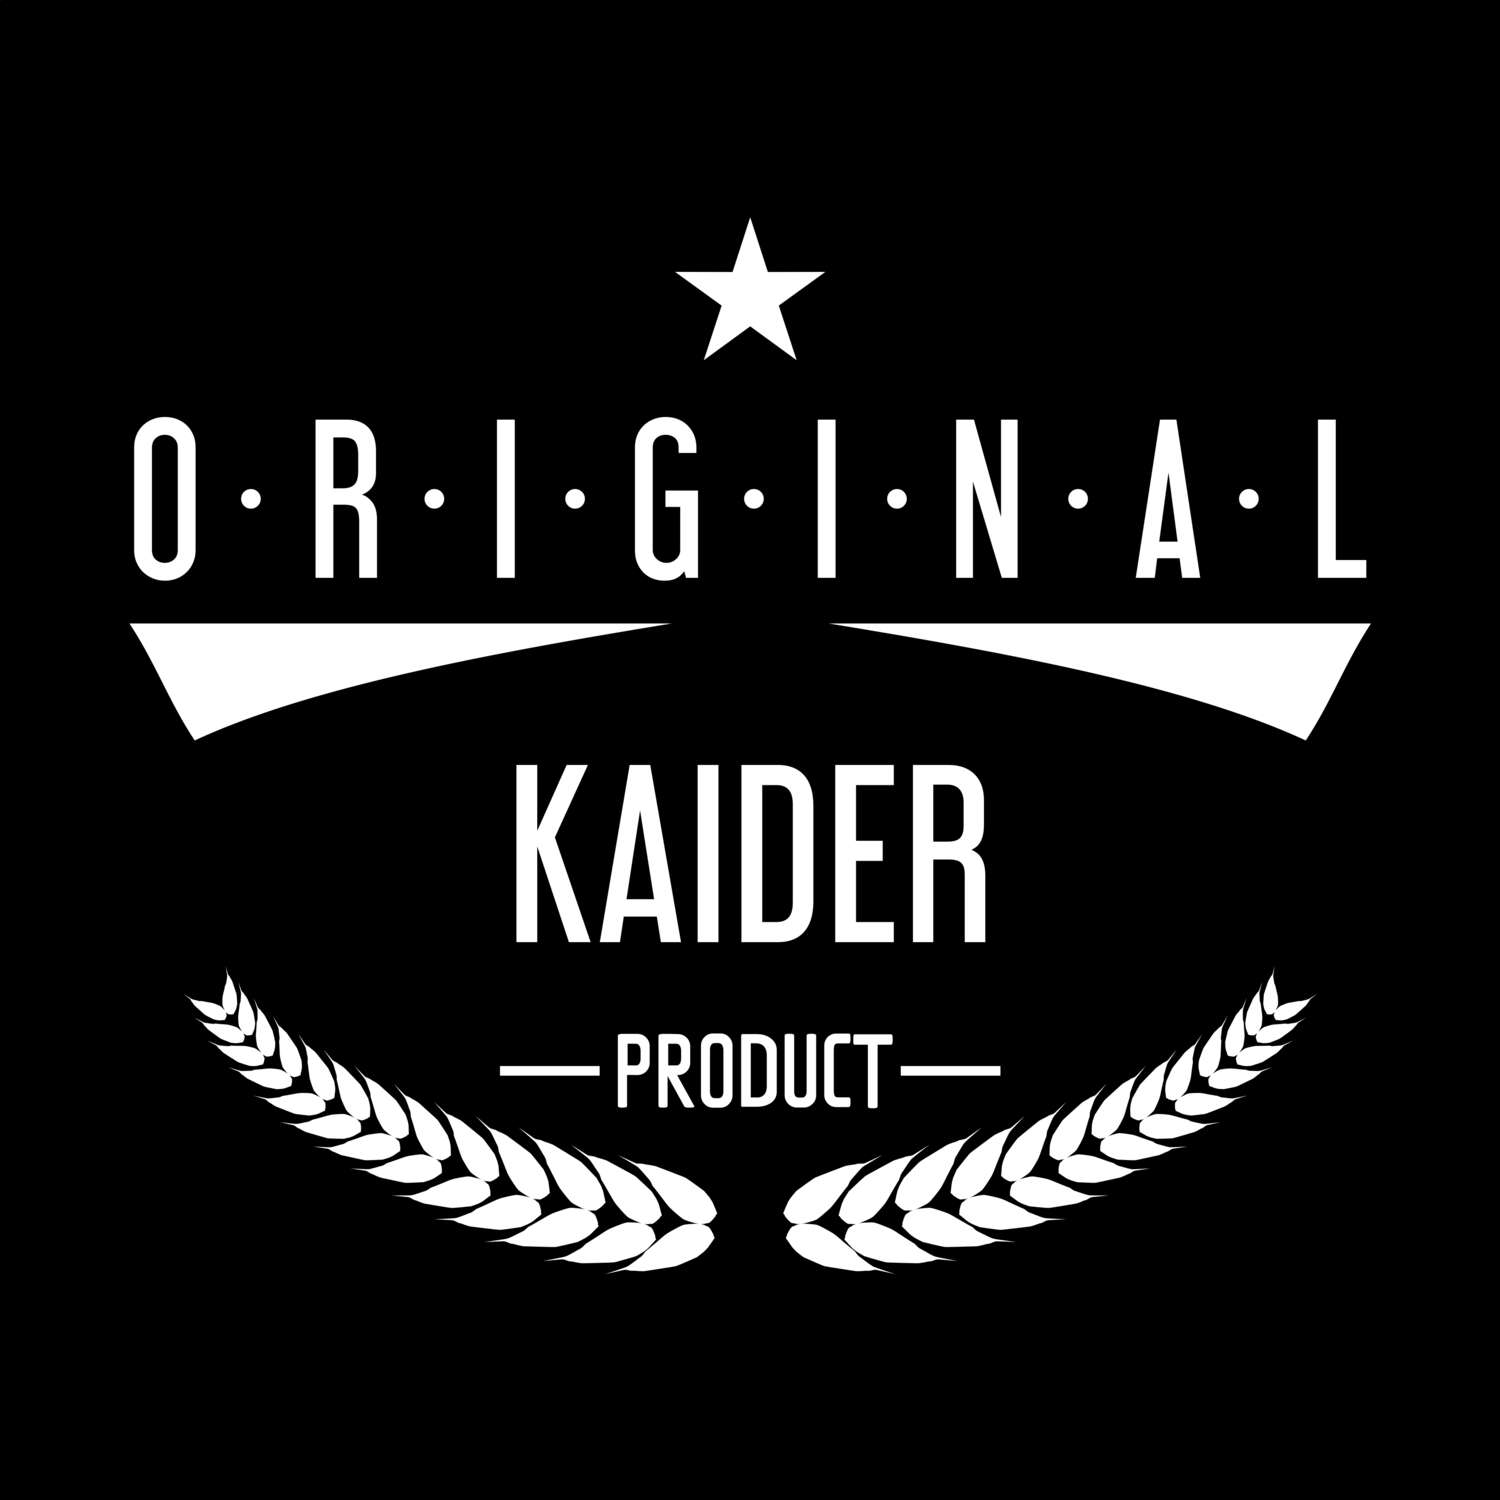 Kaider T-Shirt »Original Product«